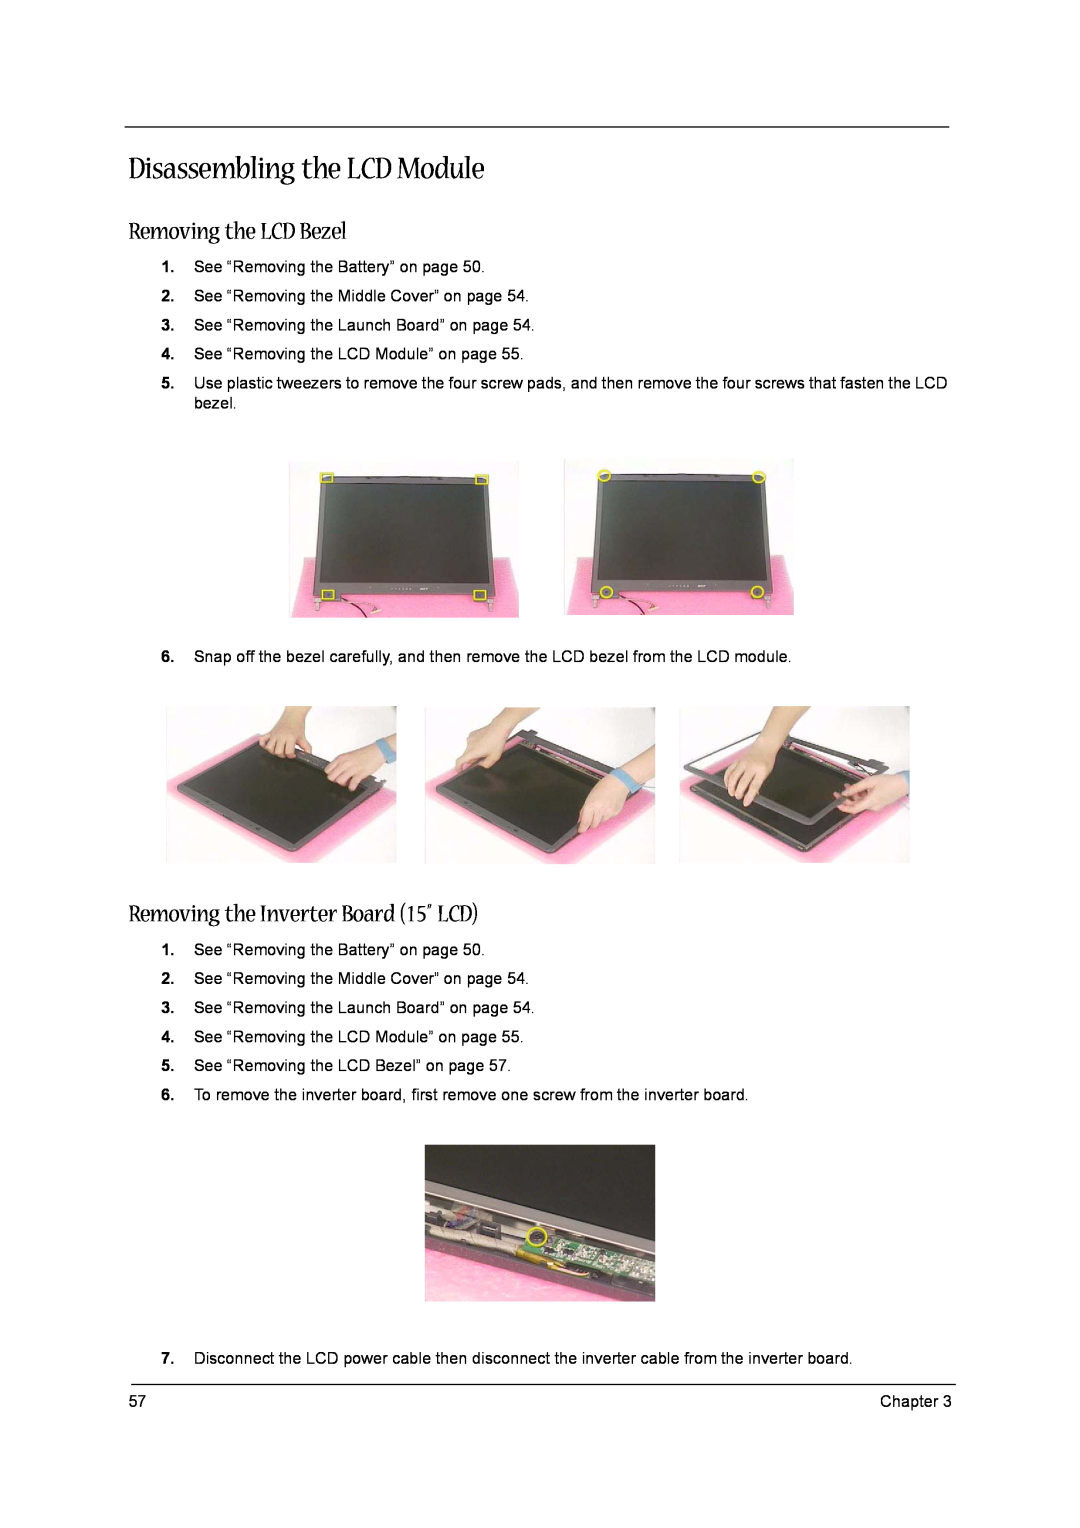 Aspire Digital 1520, 1360 manual Disassembling the LCD Module, Removing the LCD Bezel, Removing the Inverter Board 15” LCD 